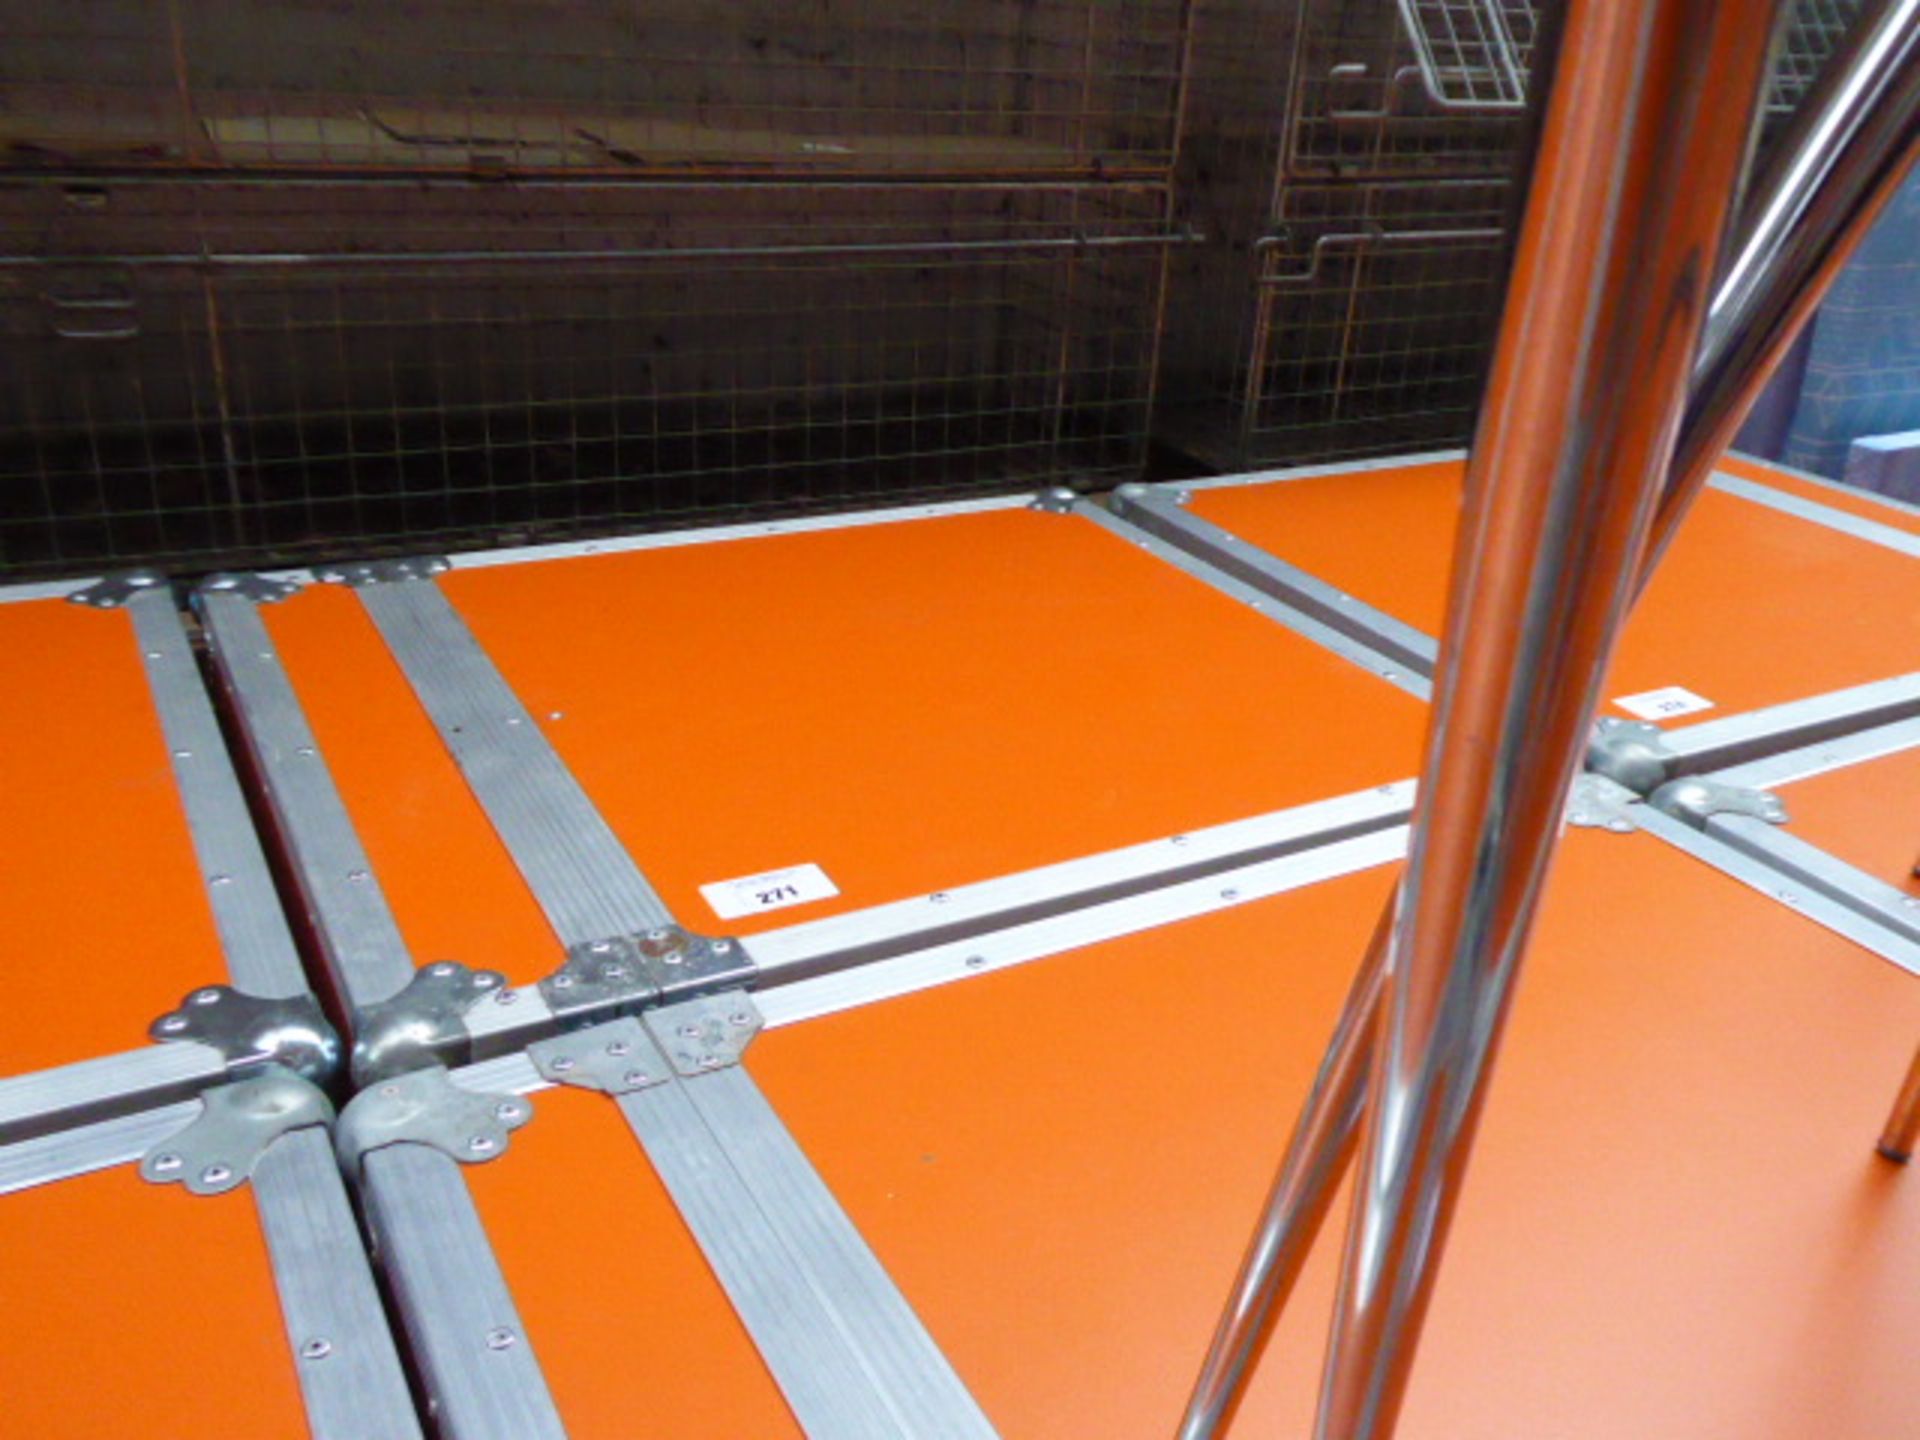 Trifibre Large orange and aluminum bound flight/logistics case on heavy duty castors fitted - Image 2 of 2